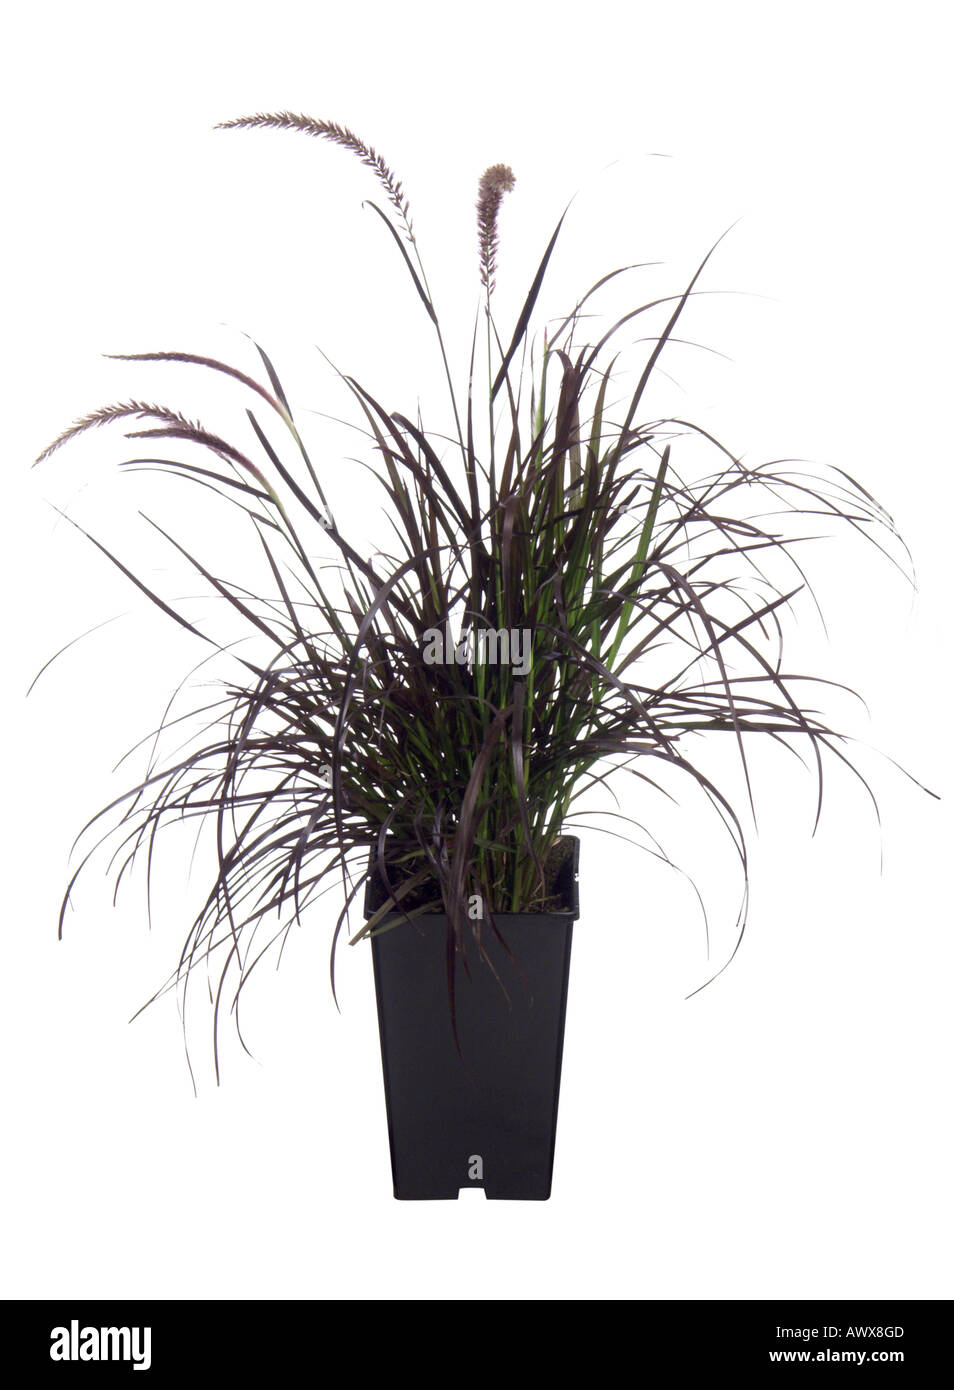 fountain grass, crimson fountaingrass (Pennisetum setaceum), cv. Rubrum, potted plant Stock Photo